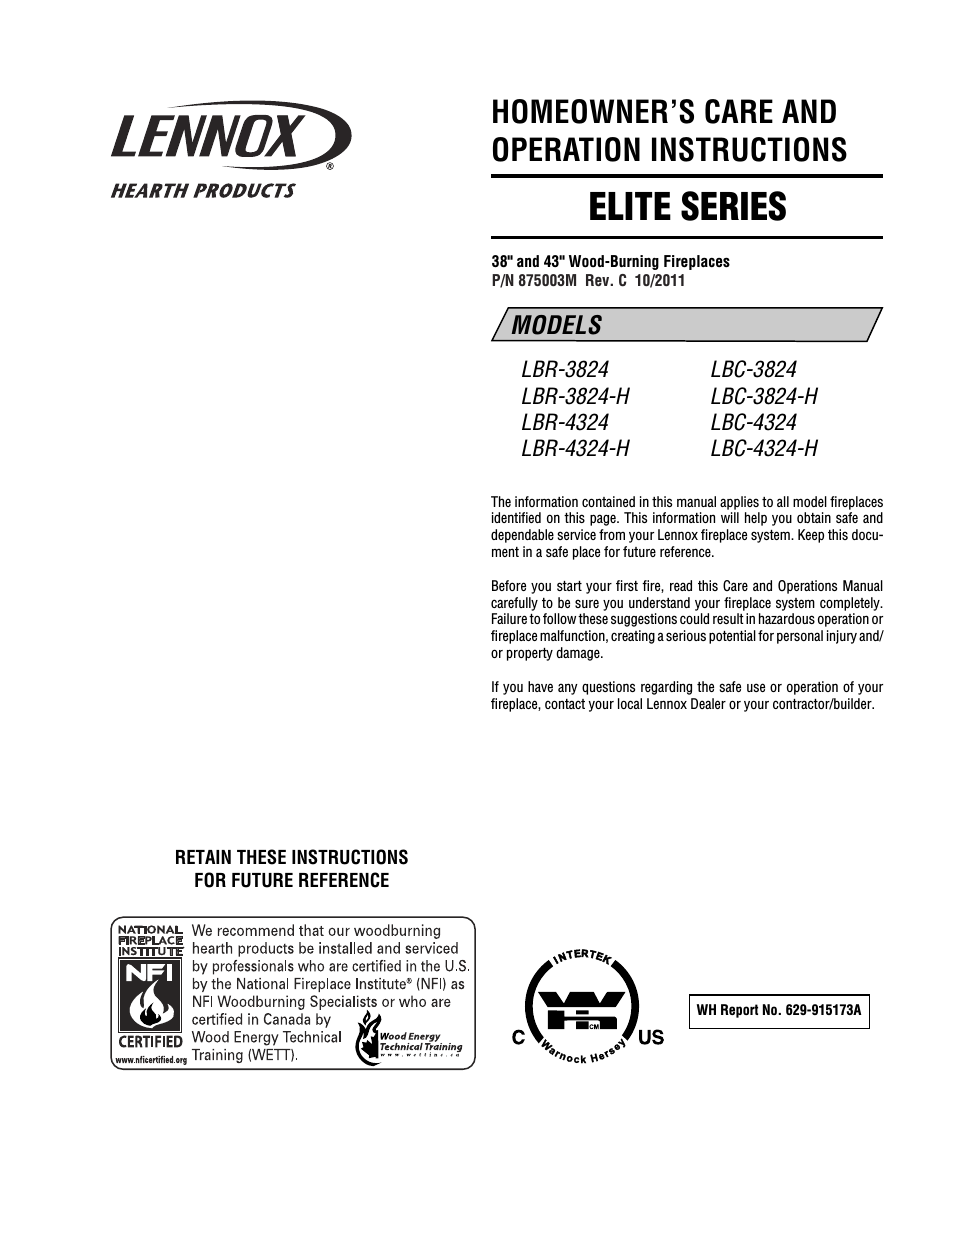 Elite LBR-3824